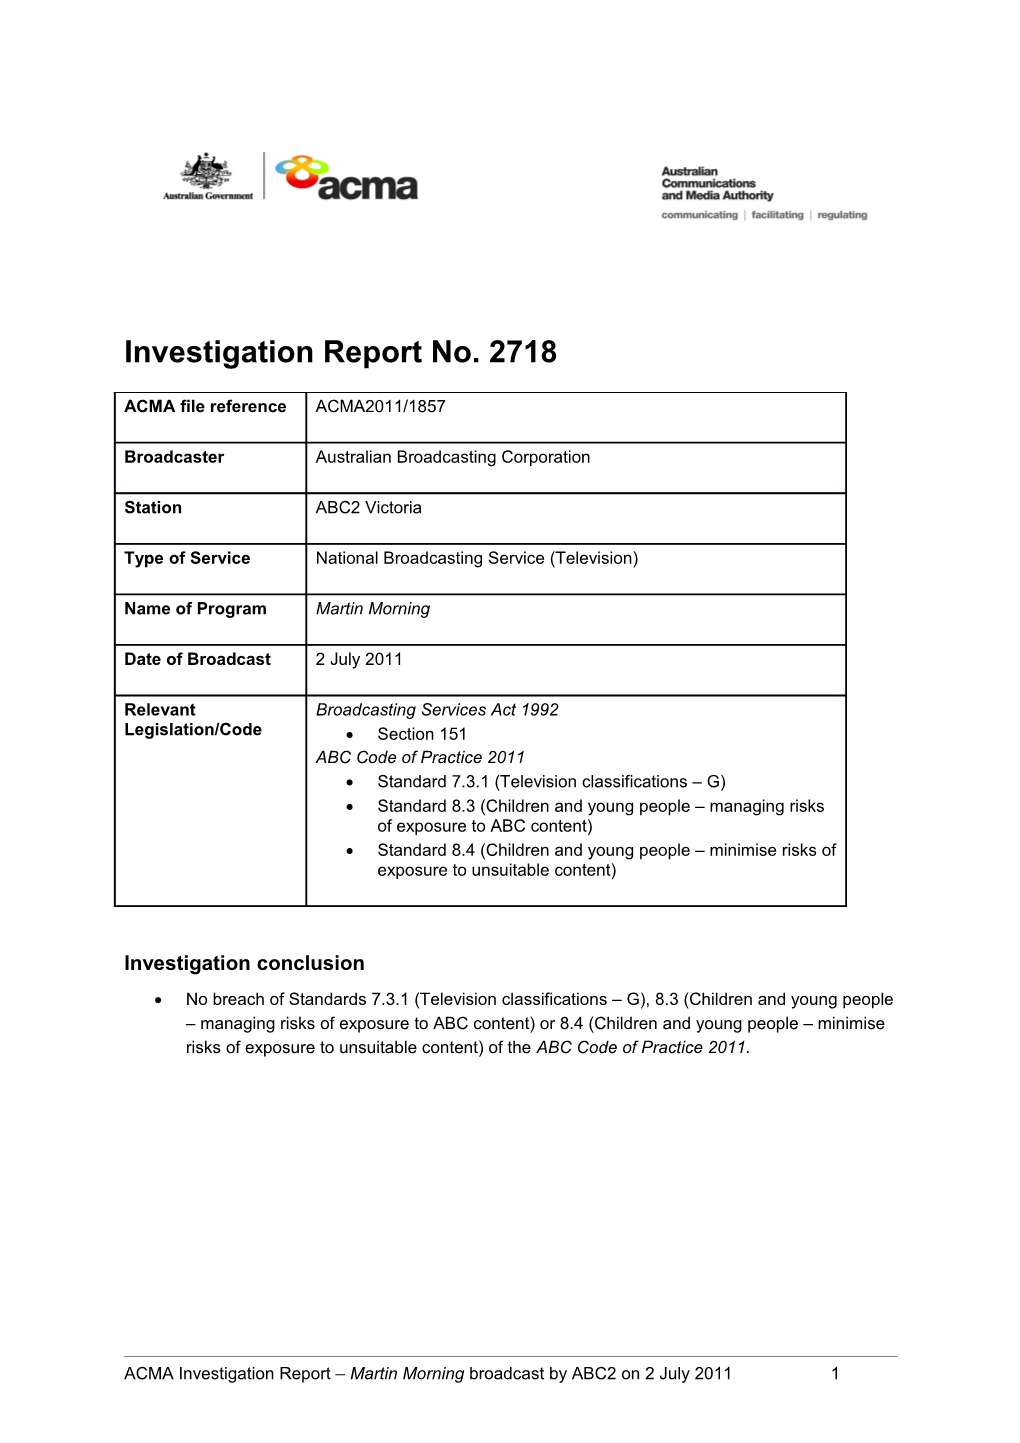 ABC2 Victoria - ACMA Investigation Report 2718